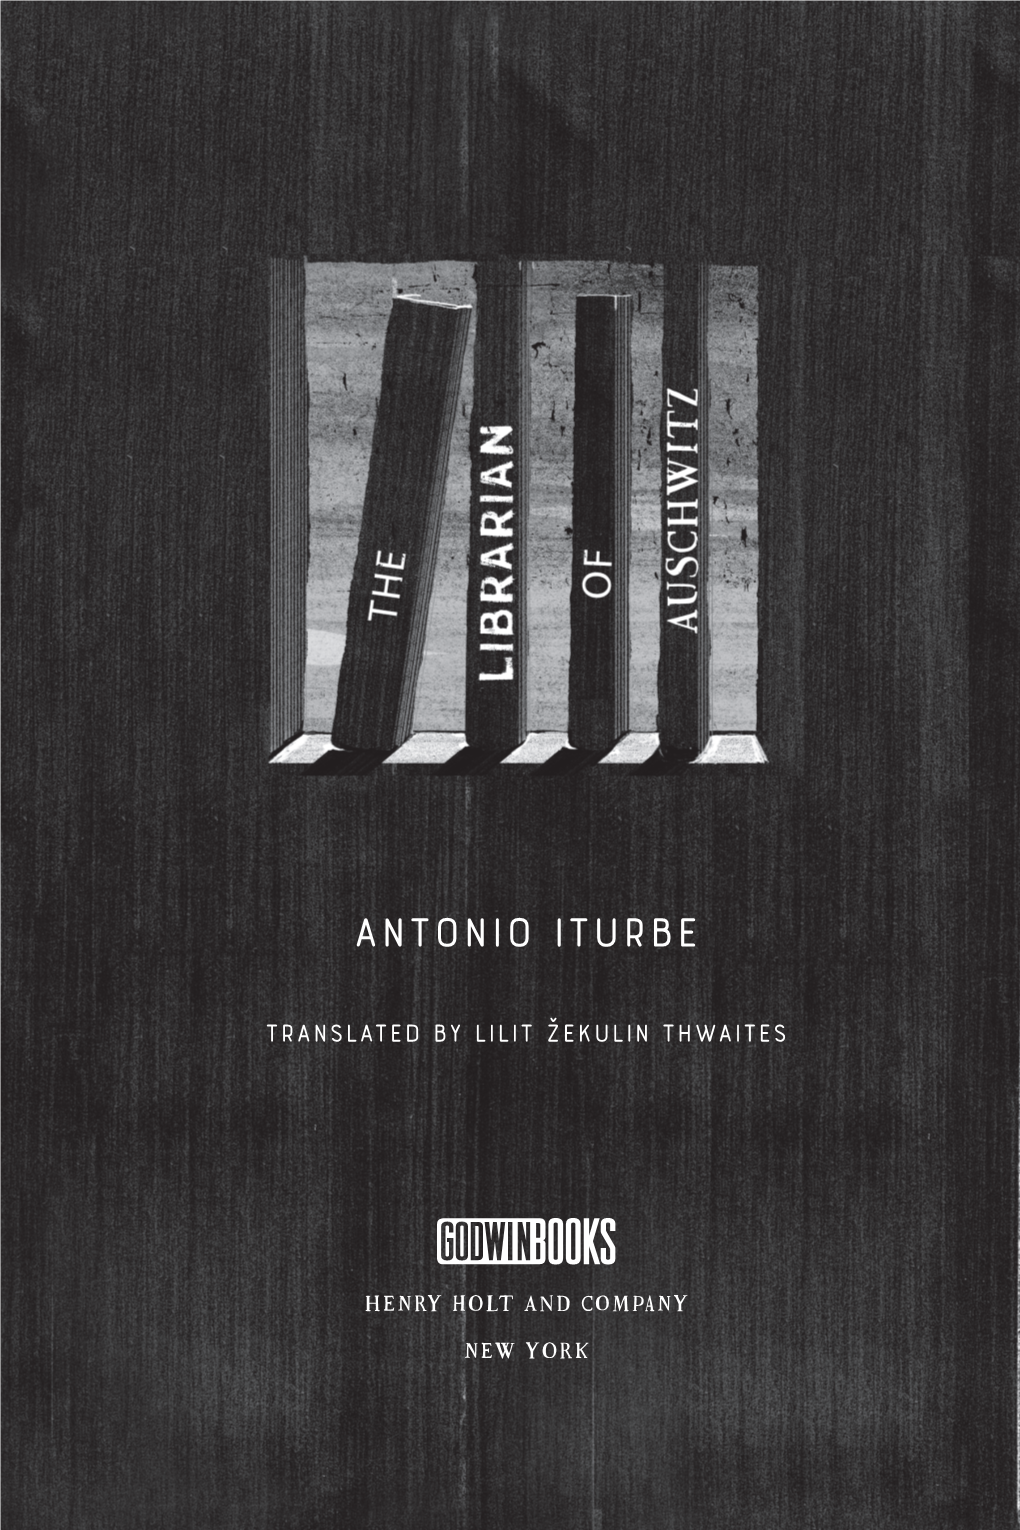 Antonio Iturbe